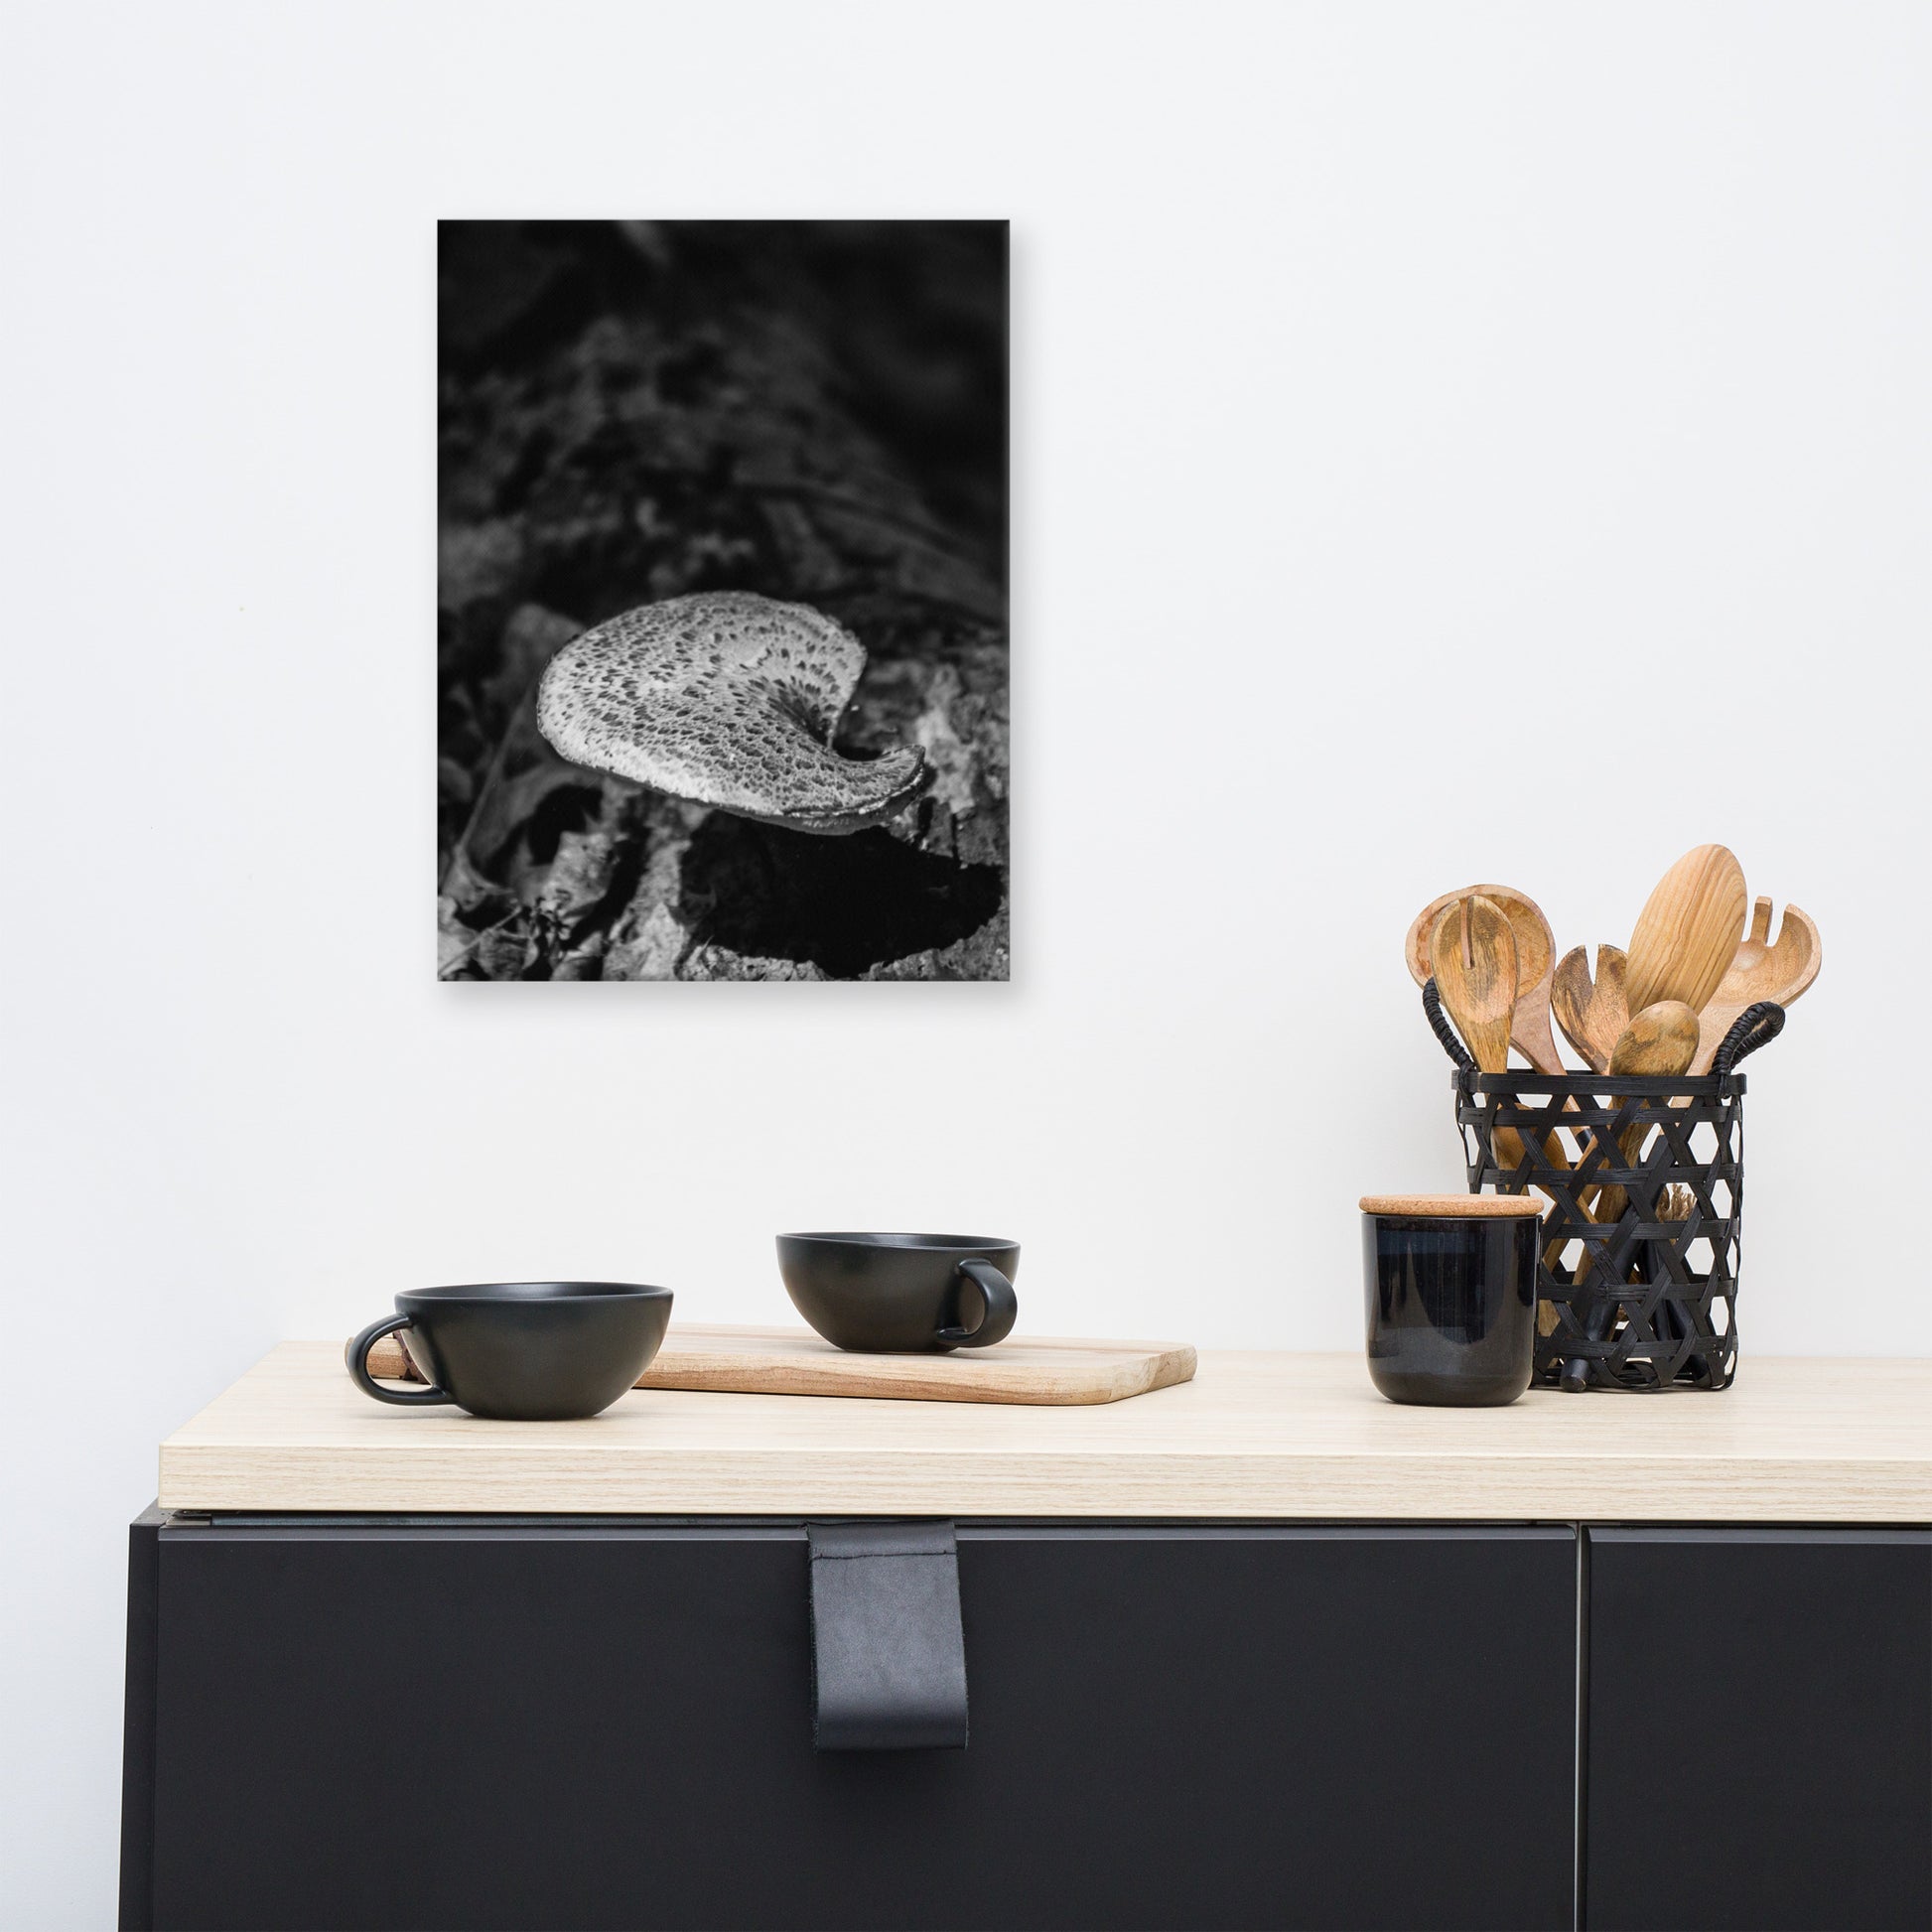 Art Decor Kitchen: Mushroom on Log Black and White Botanical Nature Canvas Wall Art Prints